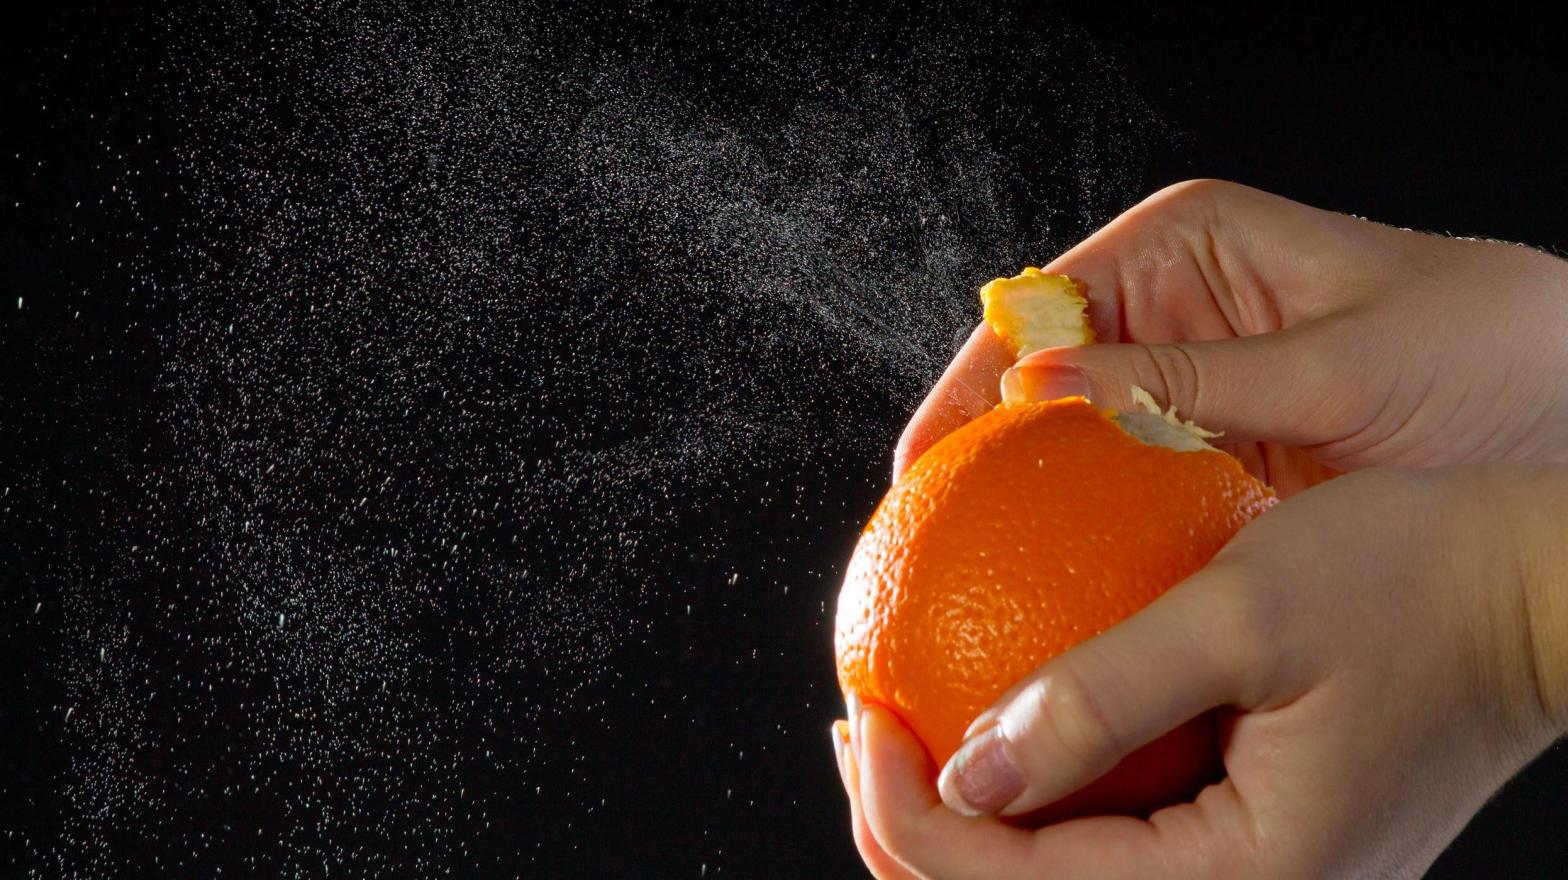 peel orange Photo: Aleksei Lazukov, Shutterstock